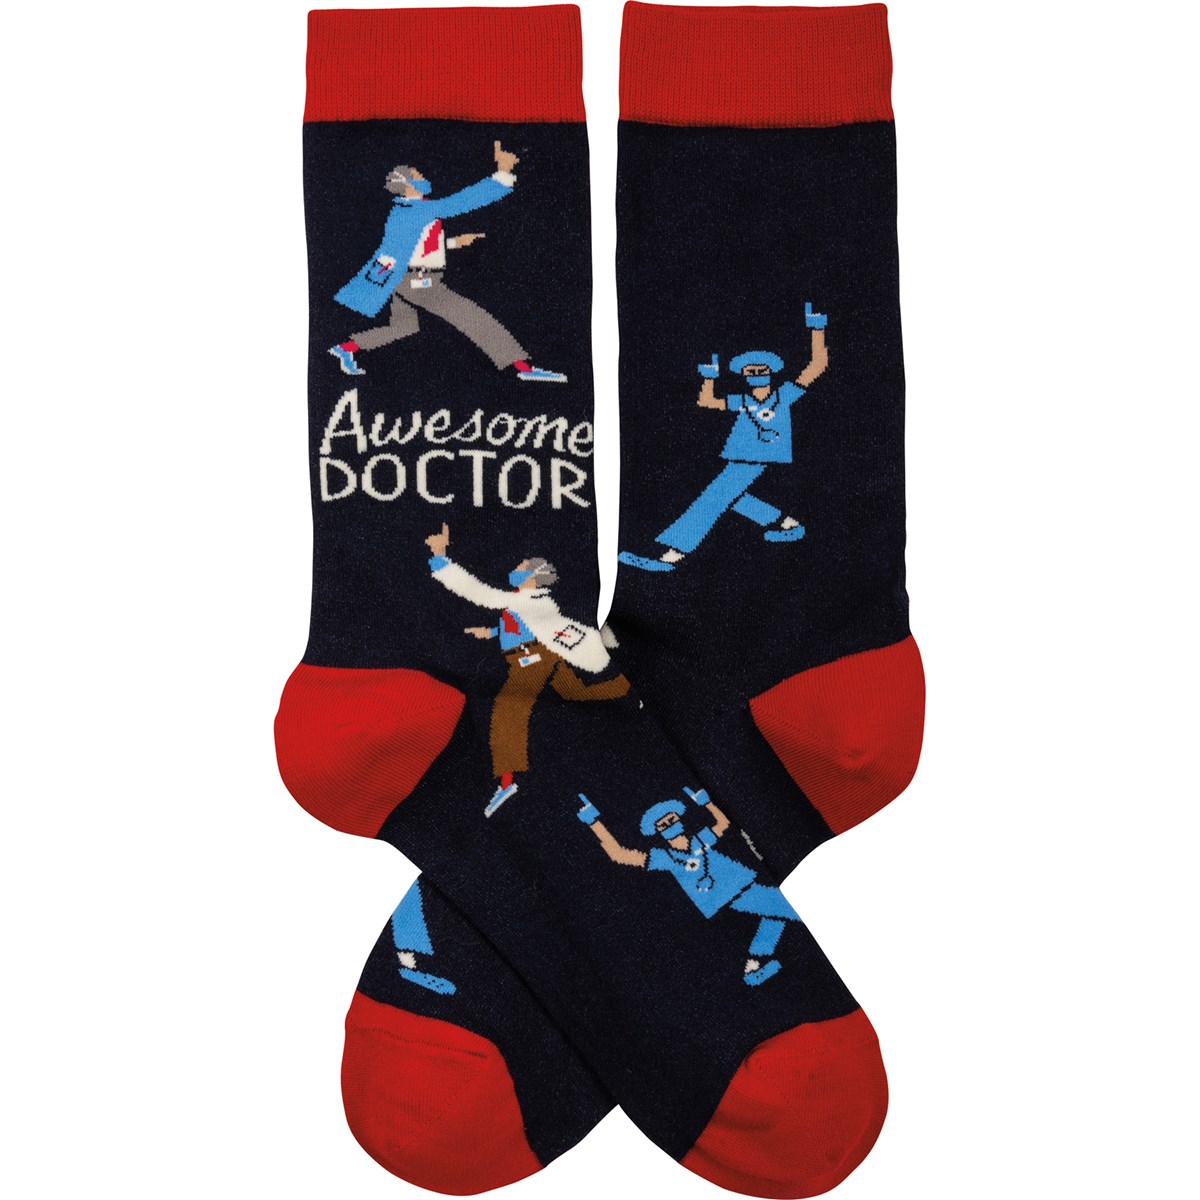 Awesome Doctor Socks - Cotton, Nylon, Spandex